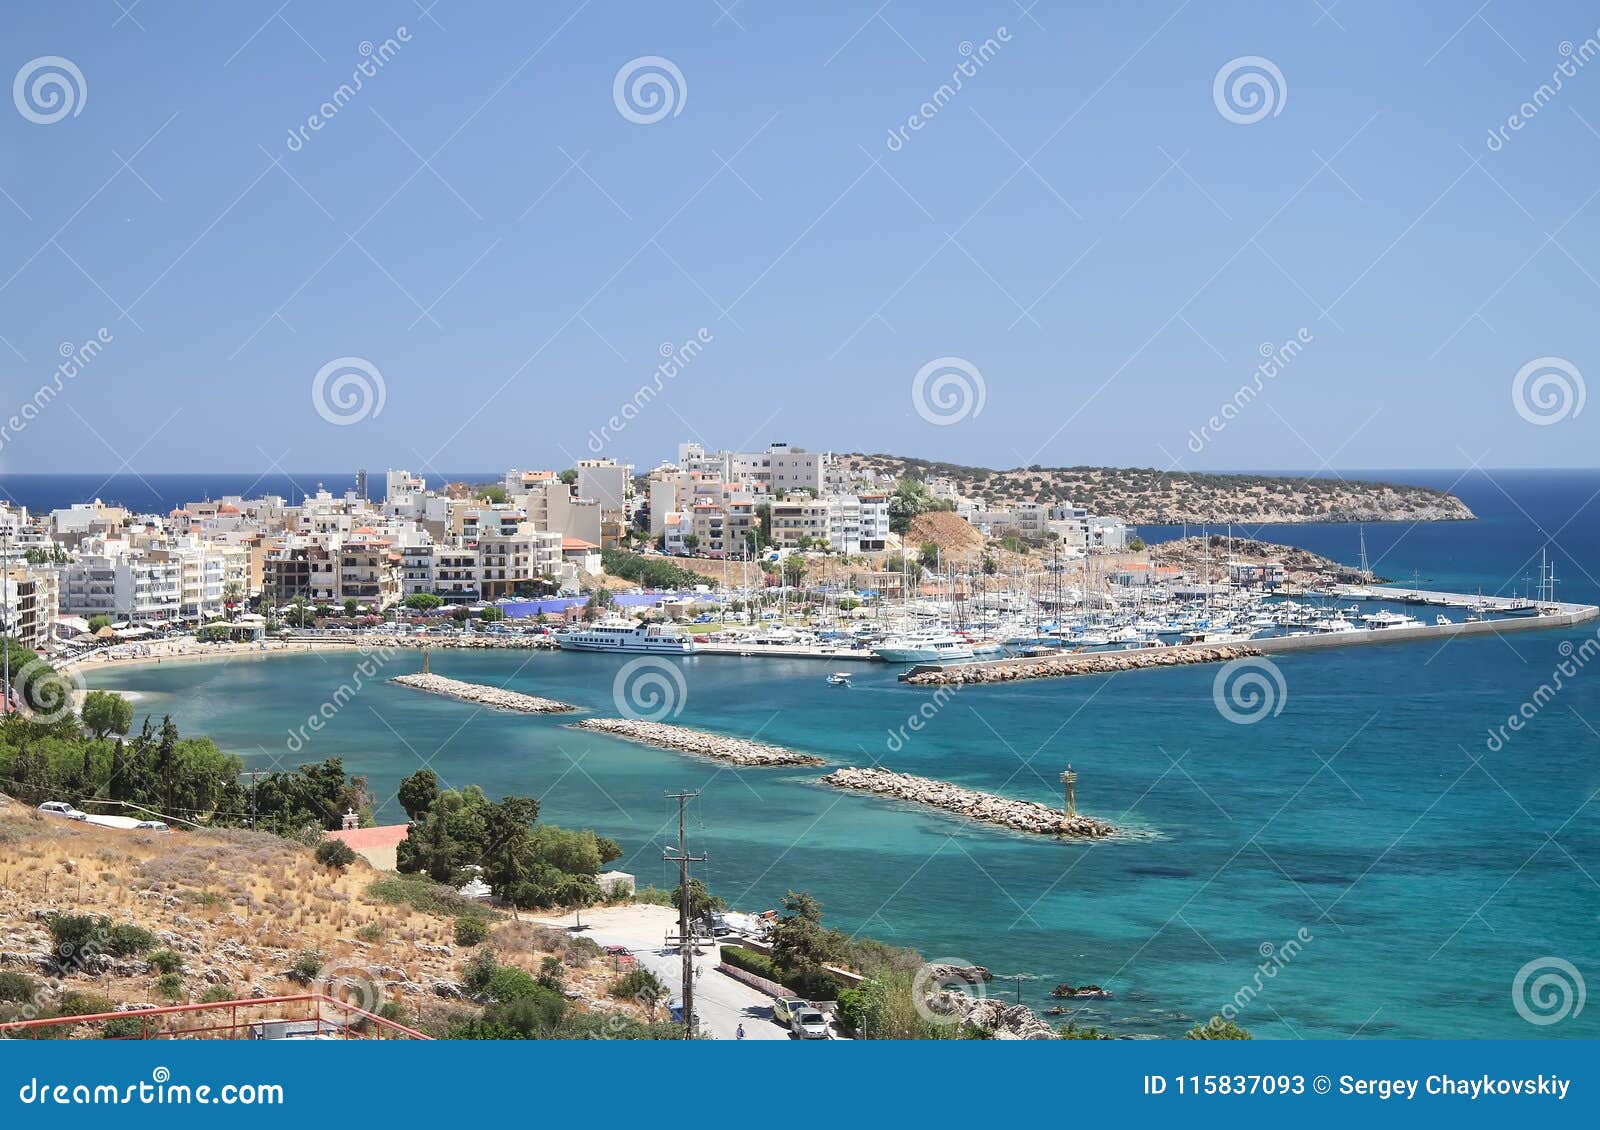 agios nikolaos is the capital of the noma of lassithi in crete